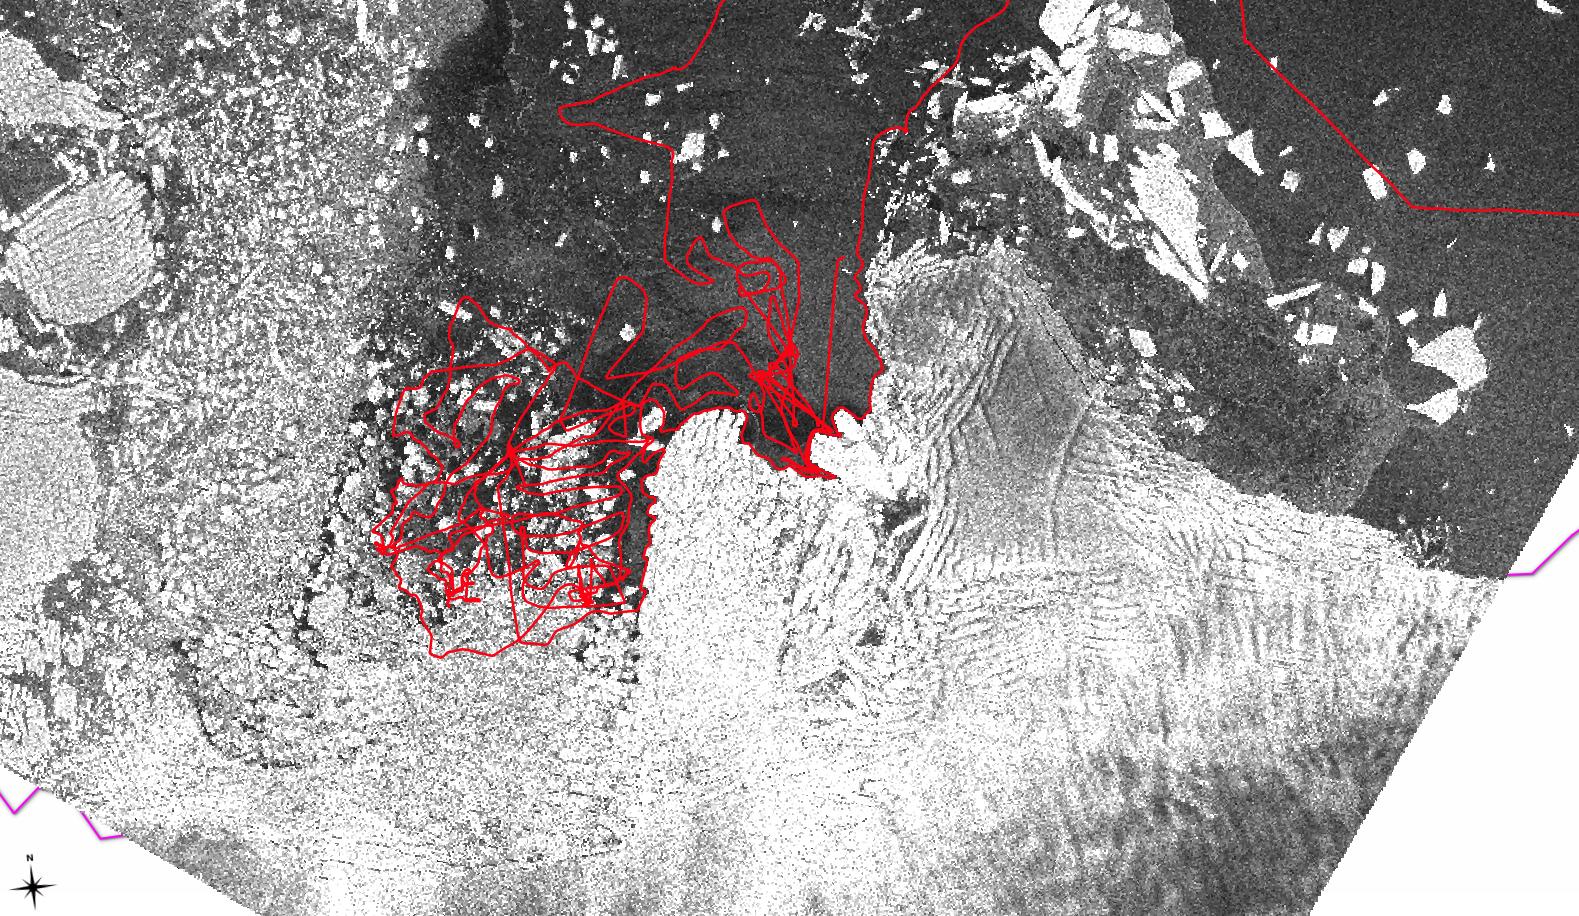 The ship's track near Thwaites Glacier (Feb. 26 - March 8, 2019) overlays an ice image from the TerraSAR-X satellite. Map created by Johan Rollandsson, TARSAN Hugin team